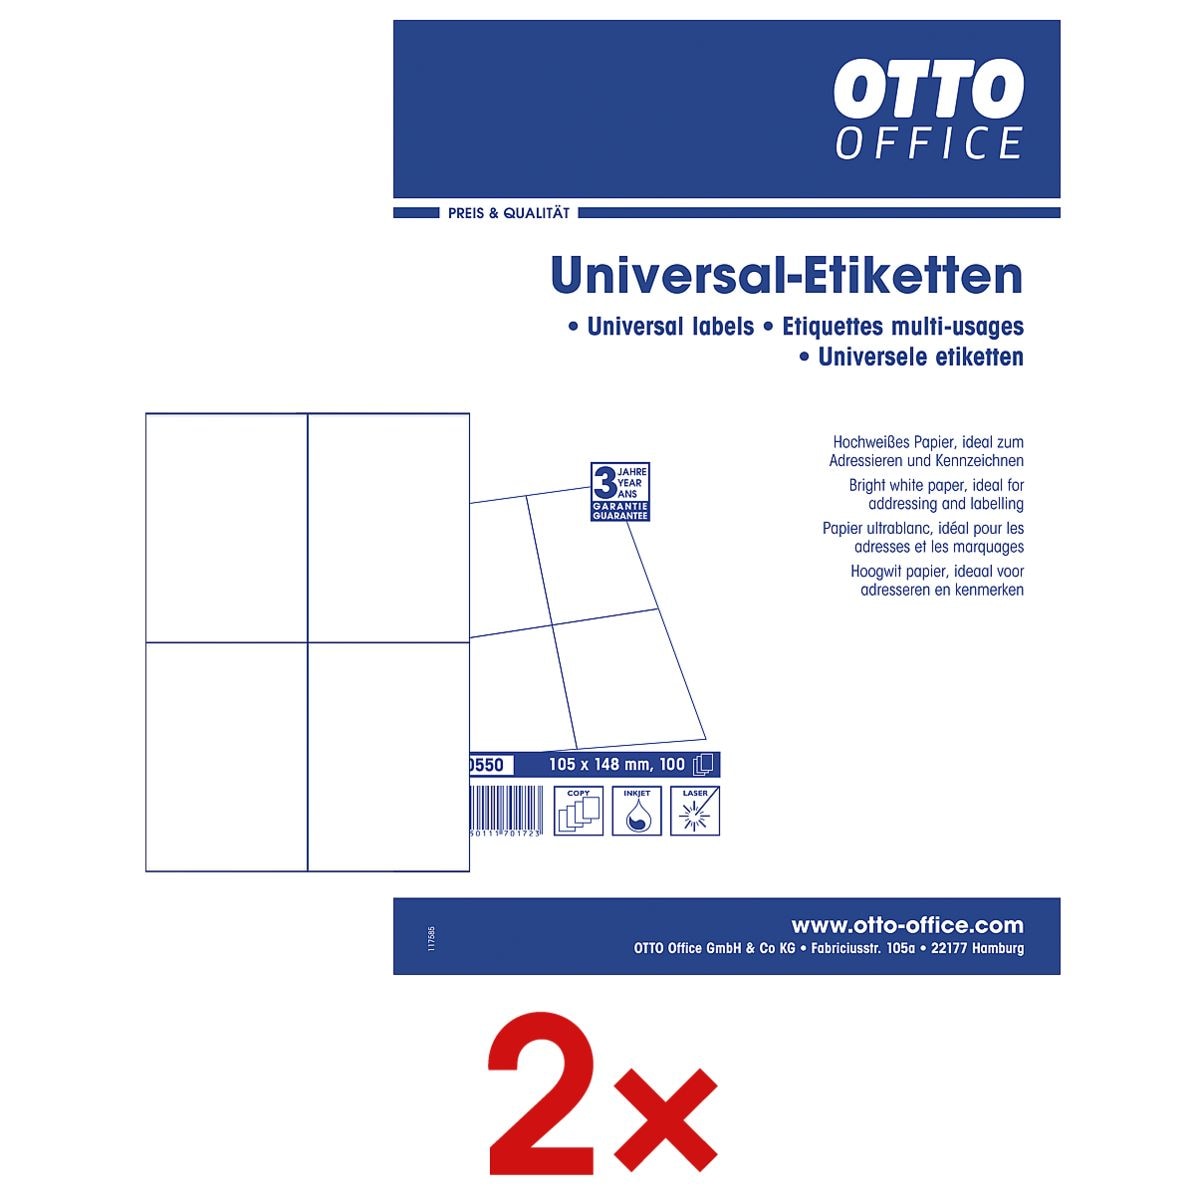 OTTO Office 2x pak met 400 bladen  4 universele etiketten